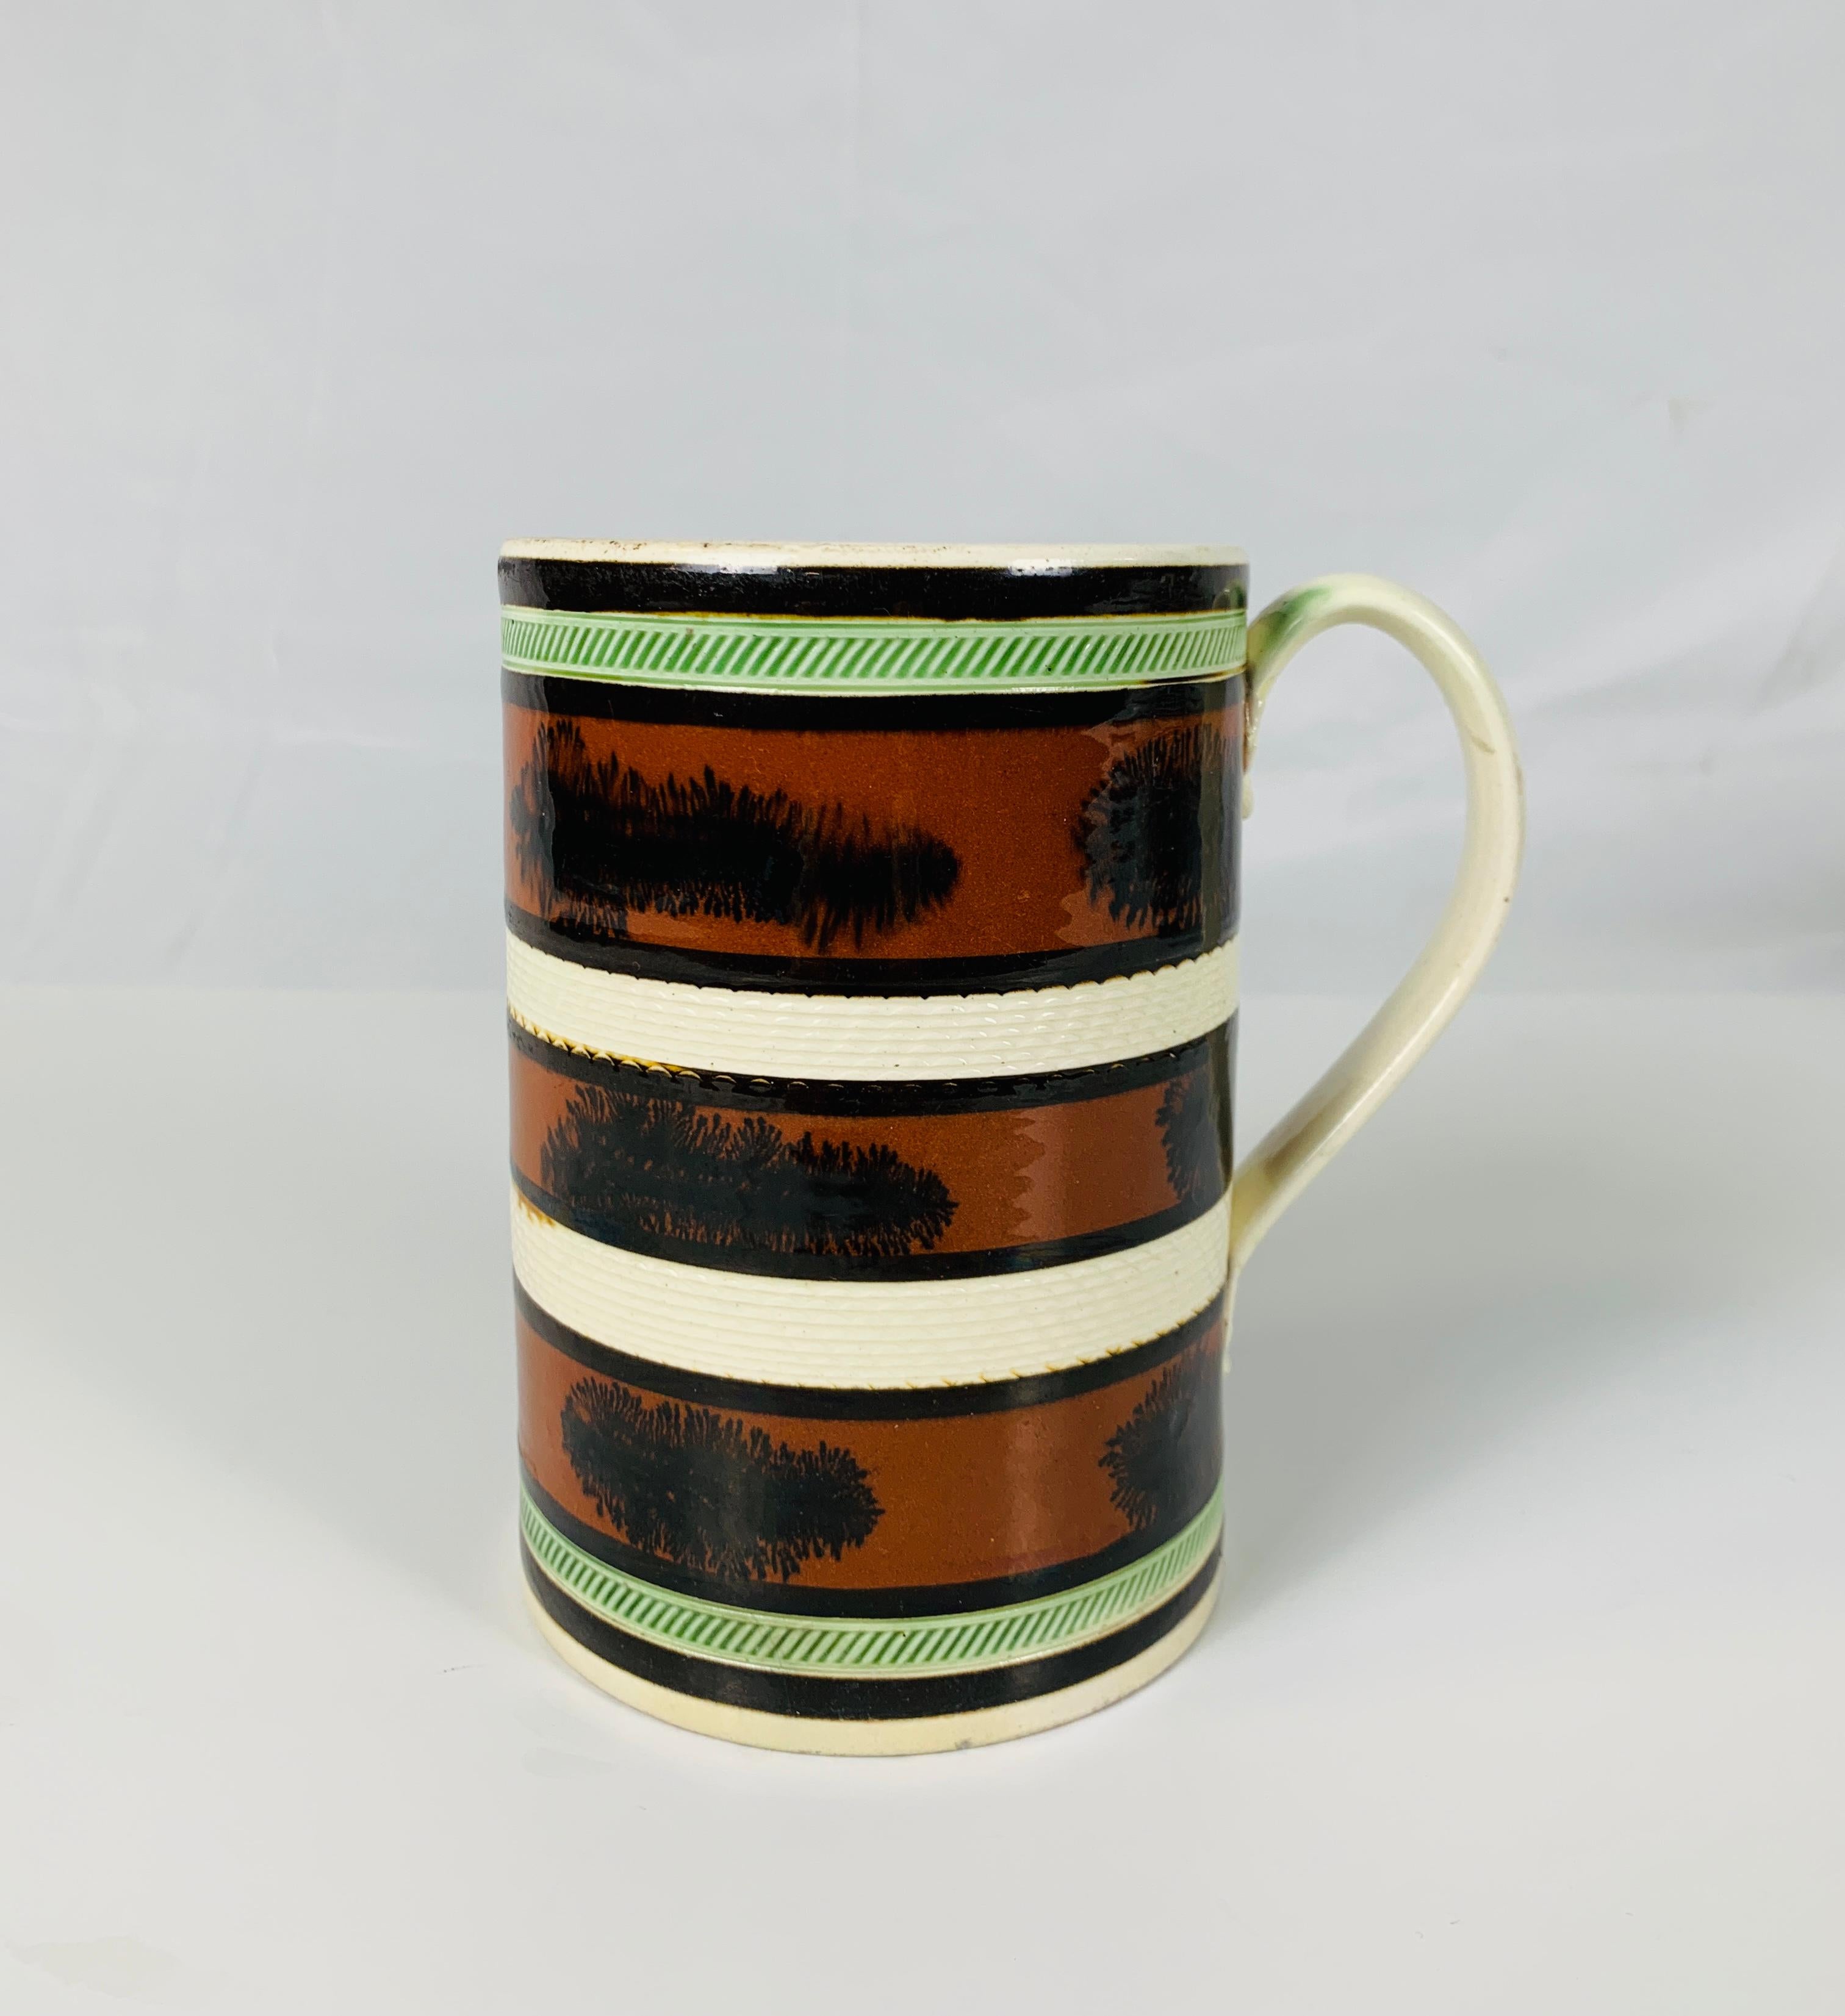 Country  Mochaware Creamware Mug Made in England circa 1800 Decorated with 